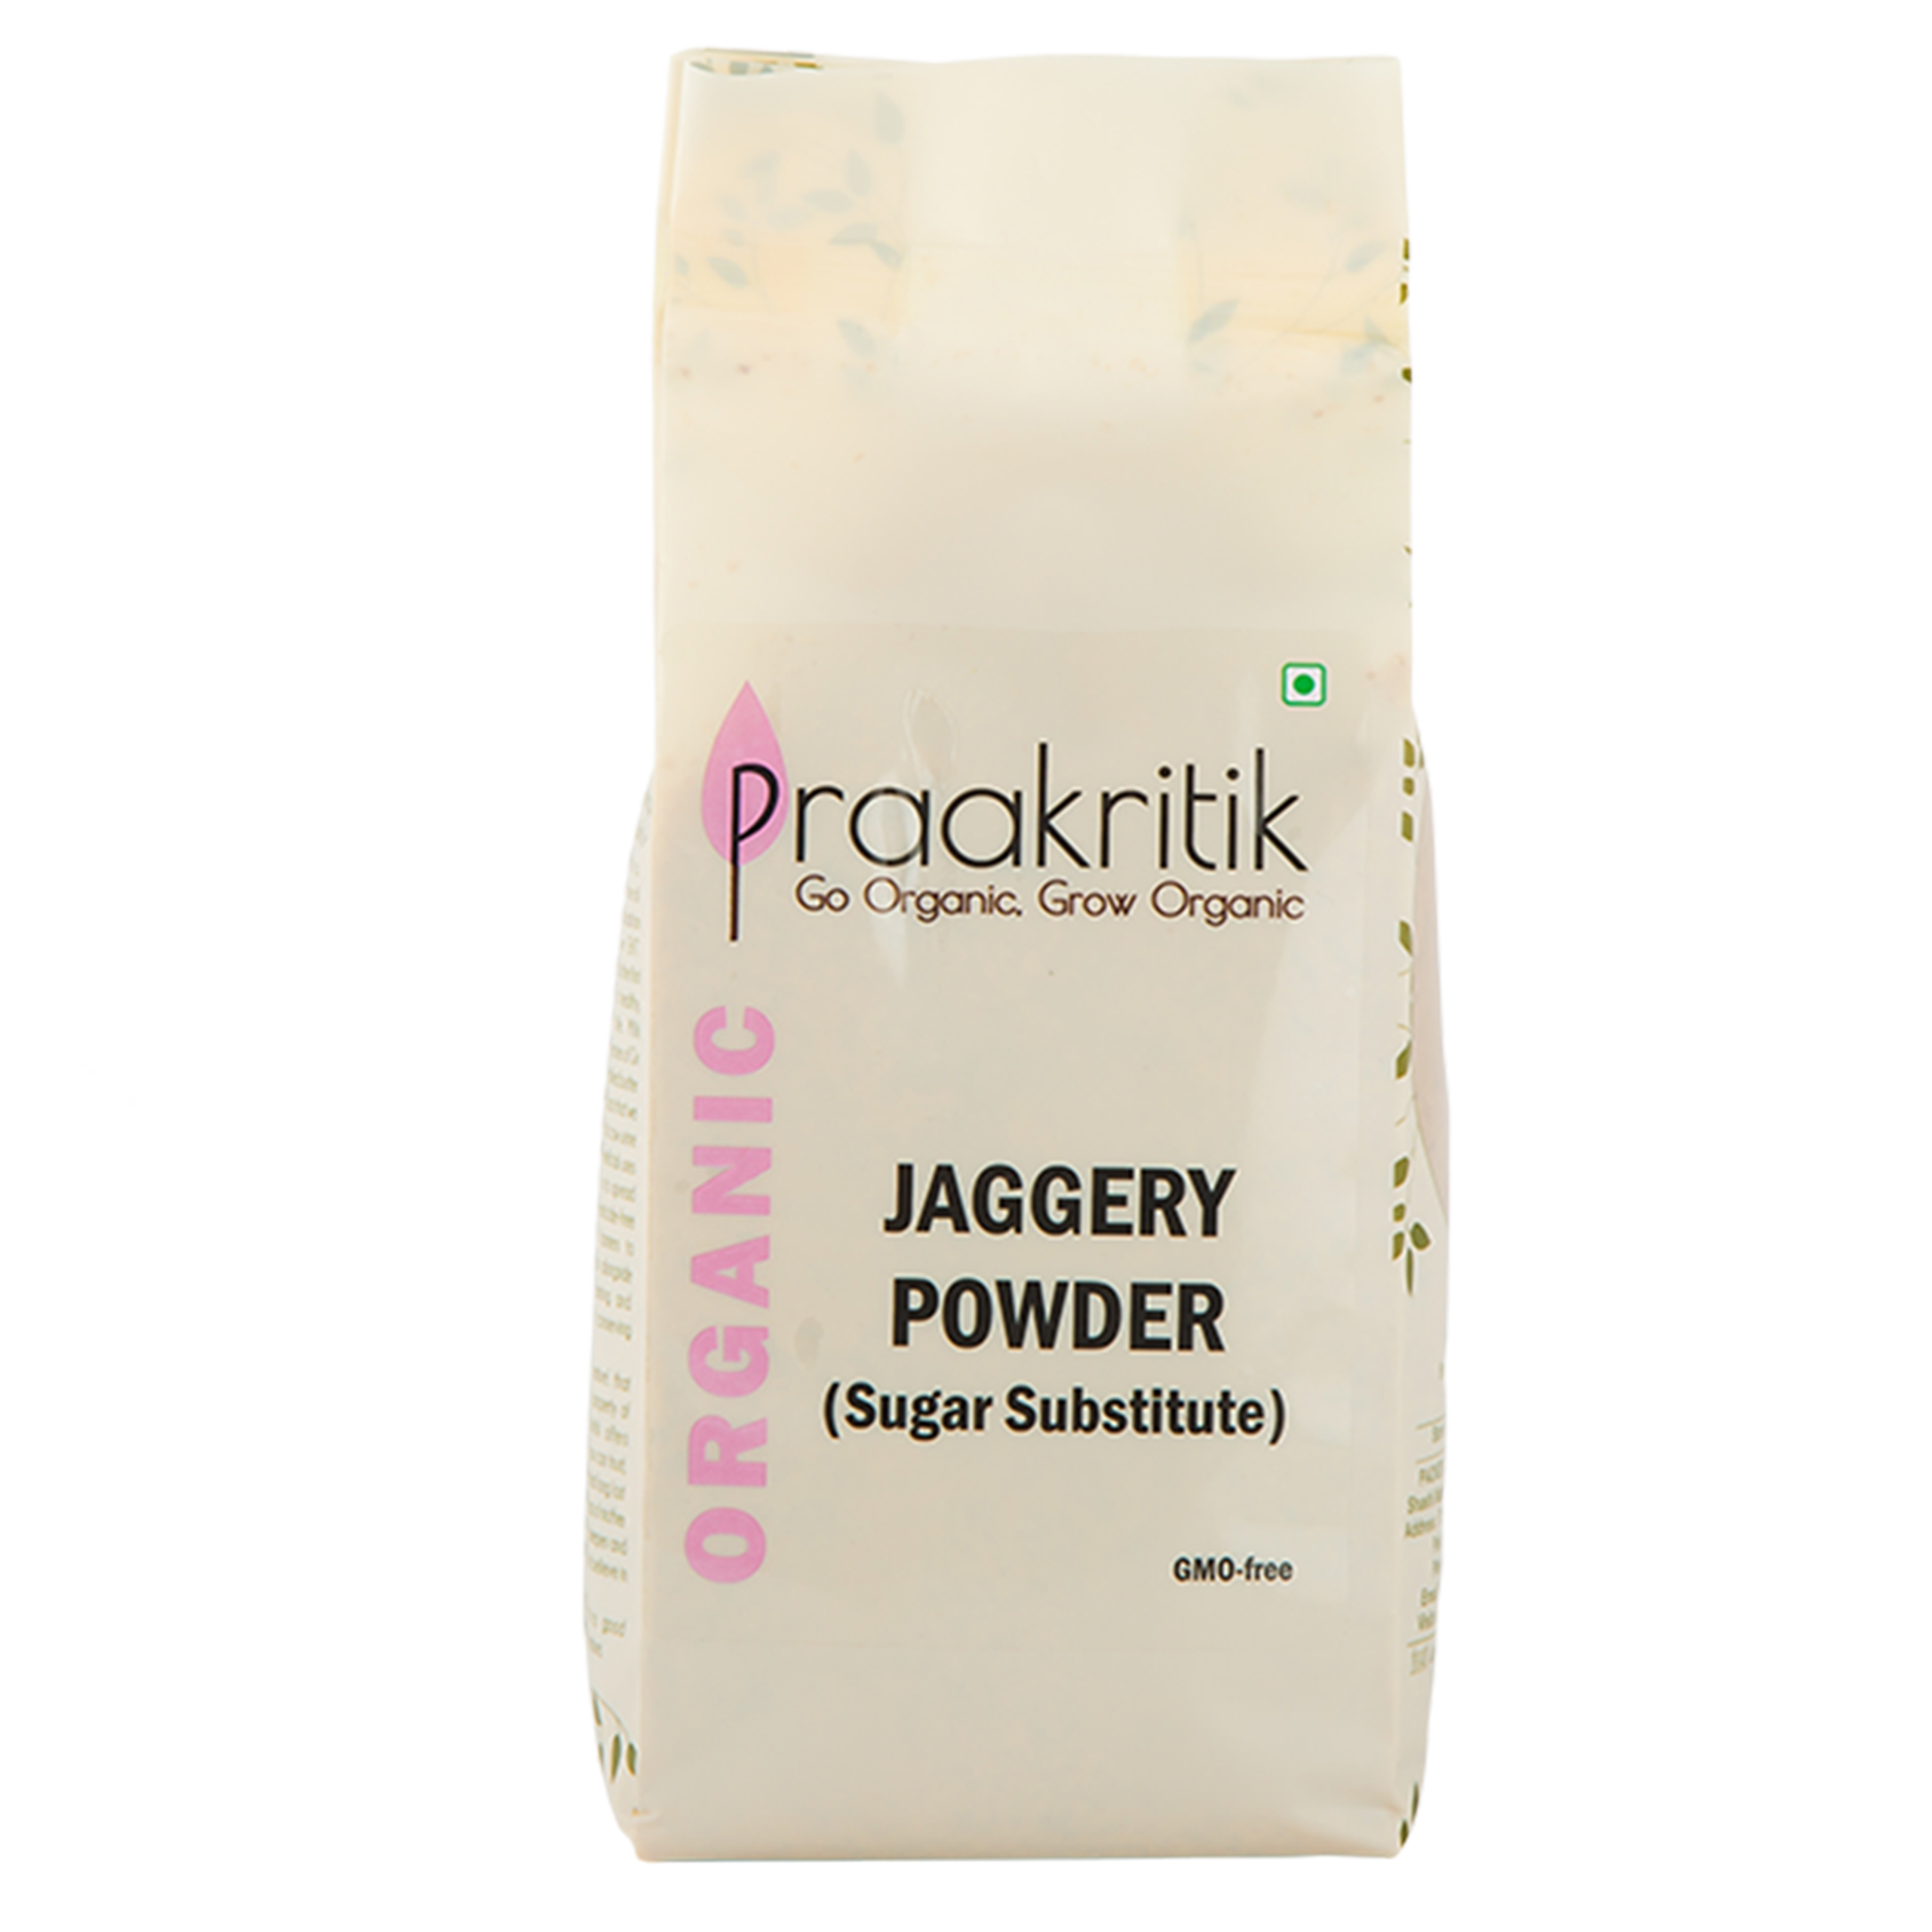 Praakritik Organic Jaggery Powder 500g